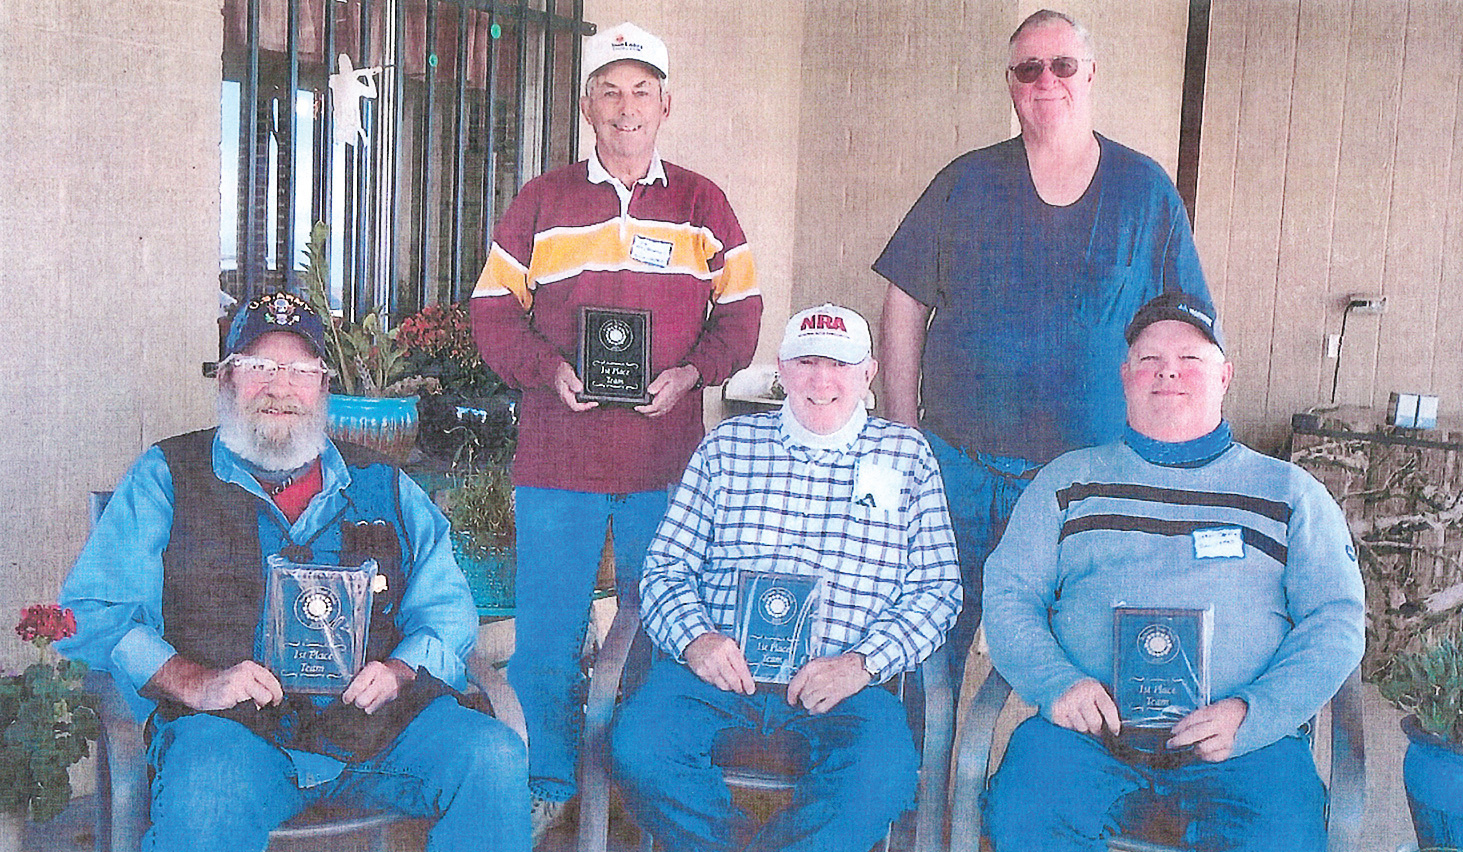 Sun Lakes team (left to right): Mac Mackerman, 69; Ted Tenbroeck, 73; Frank Nance, 68; Charles Chapman, 71; and Sean Jeffries, 65